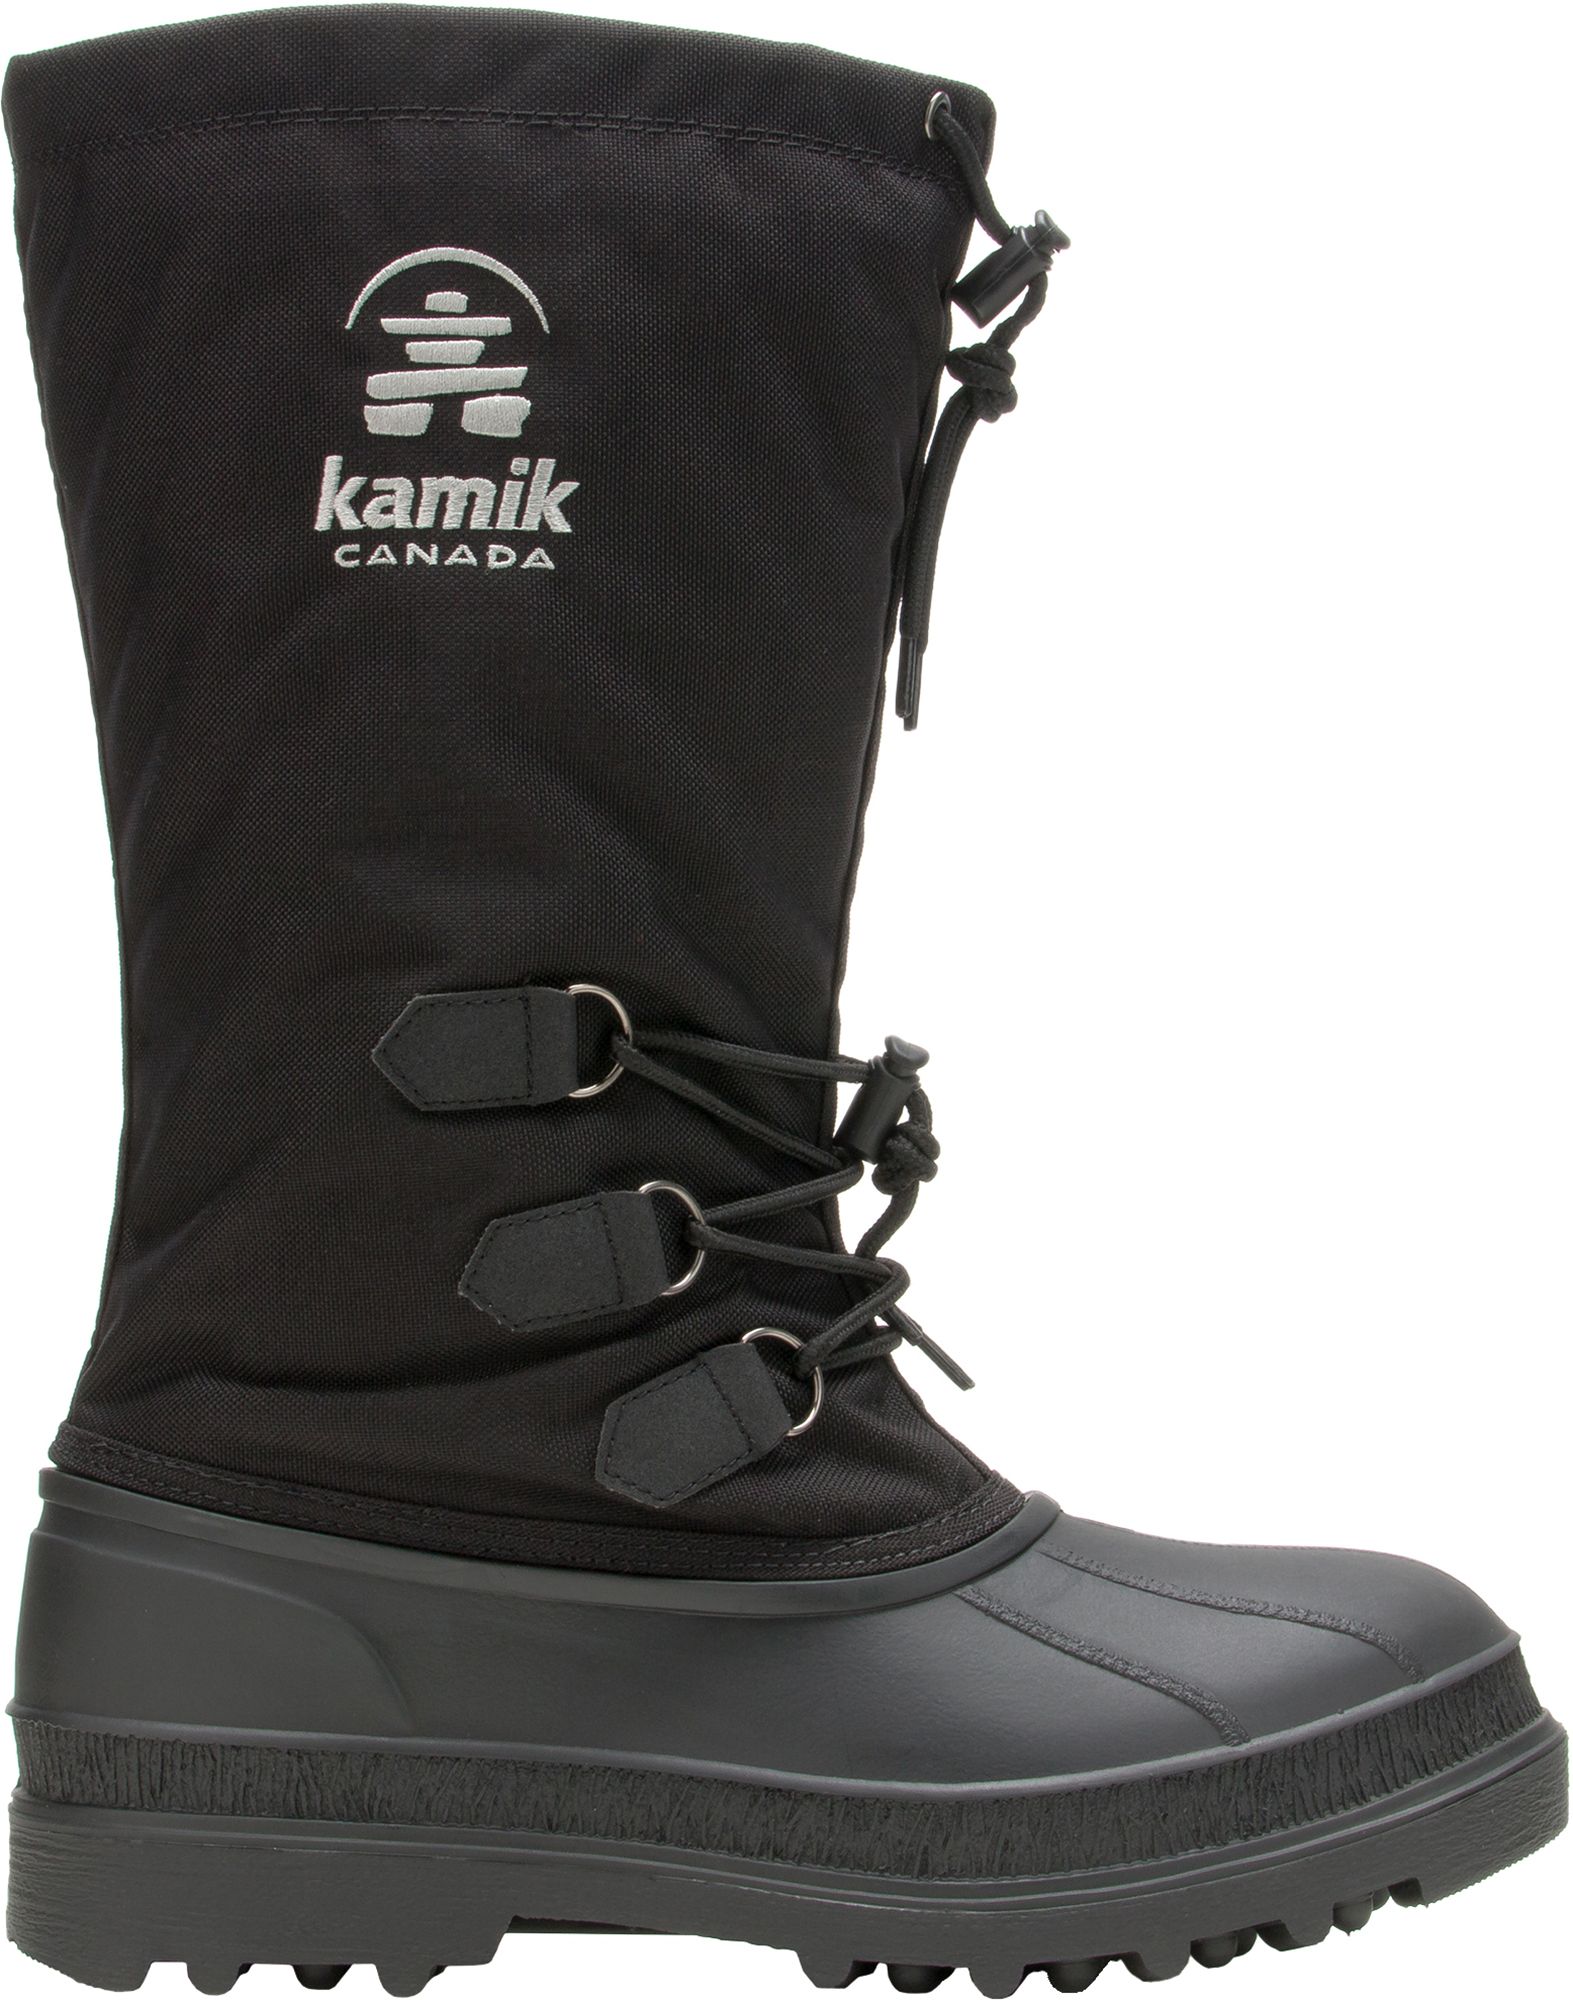 kamik shoes canada